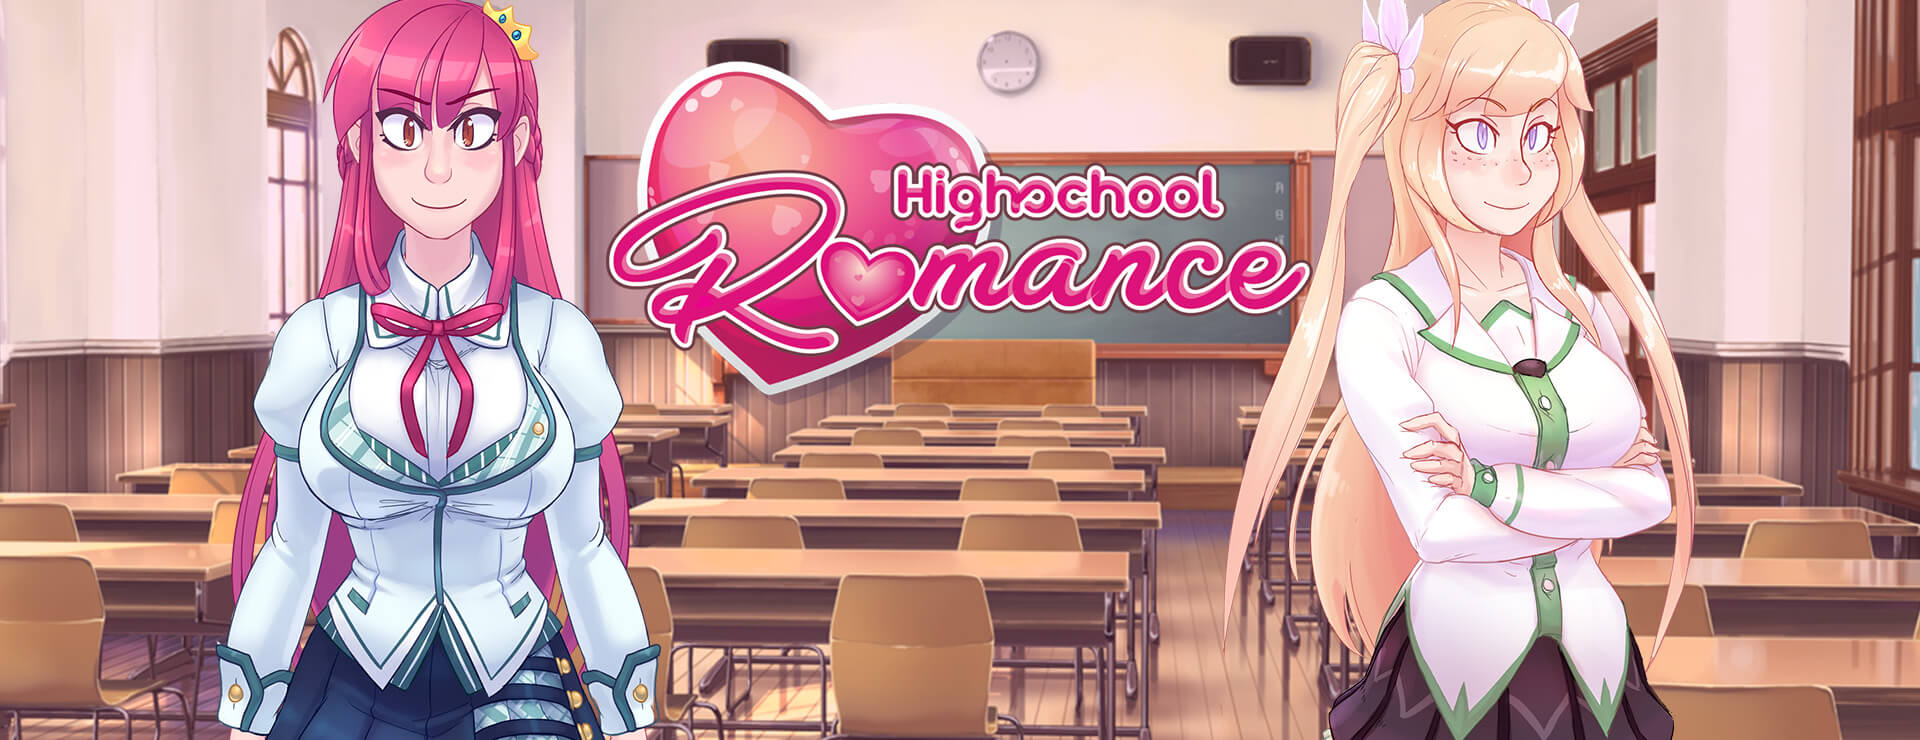 Highschool Romance - ビジュアルノベル ゲーム